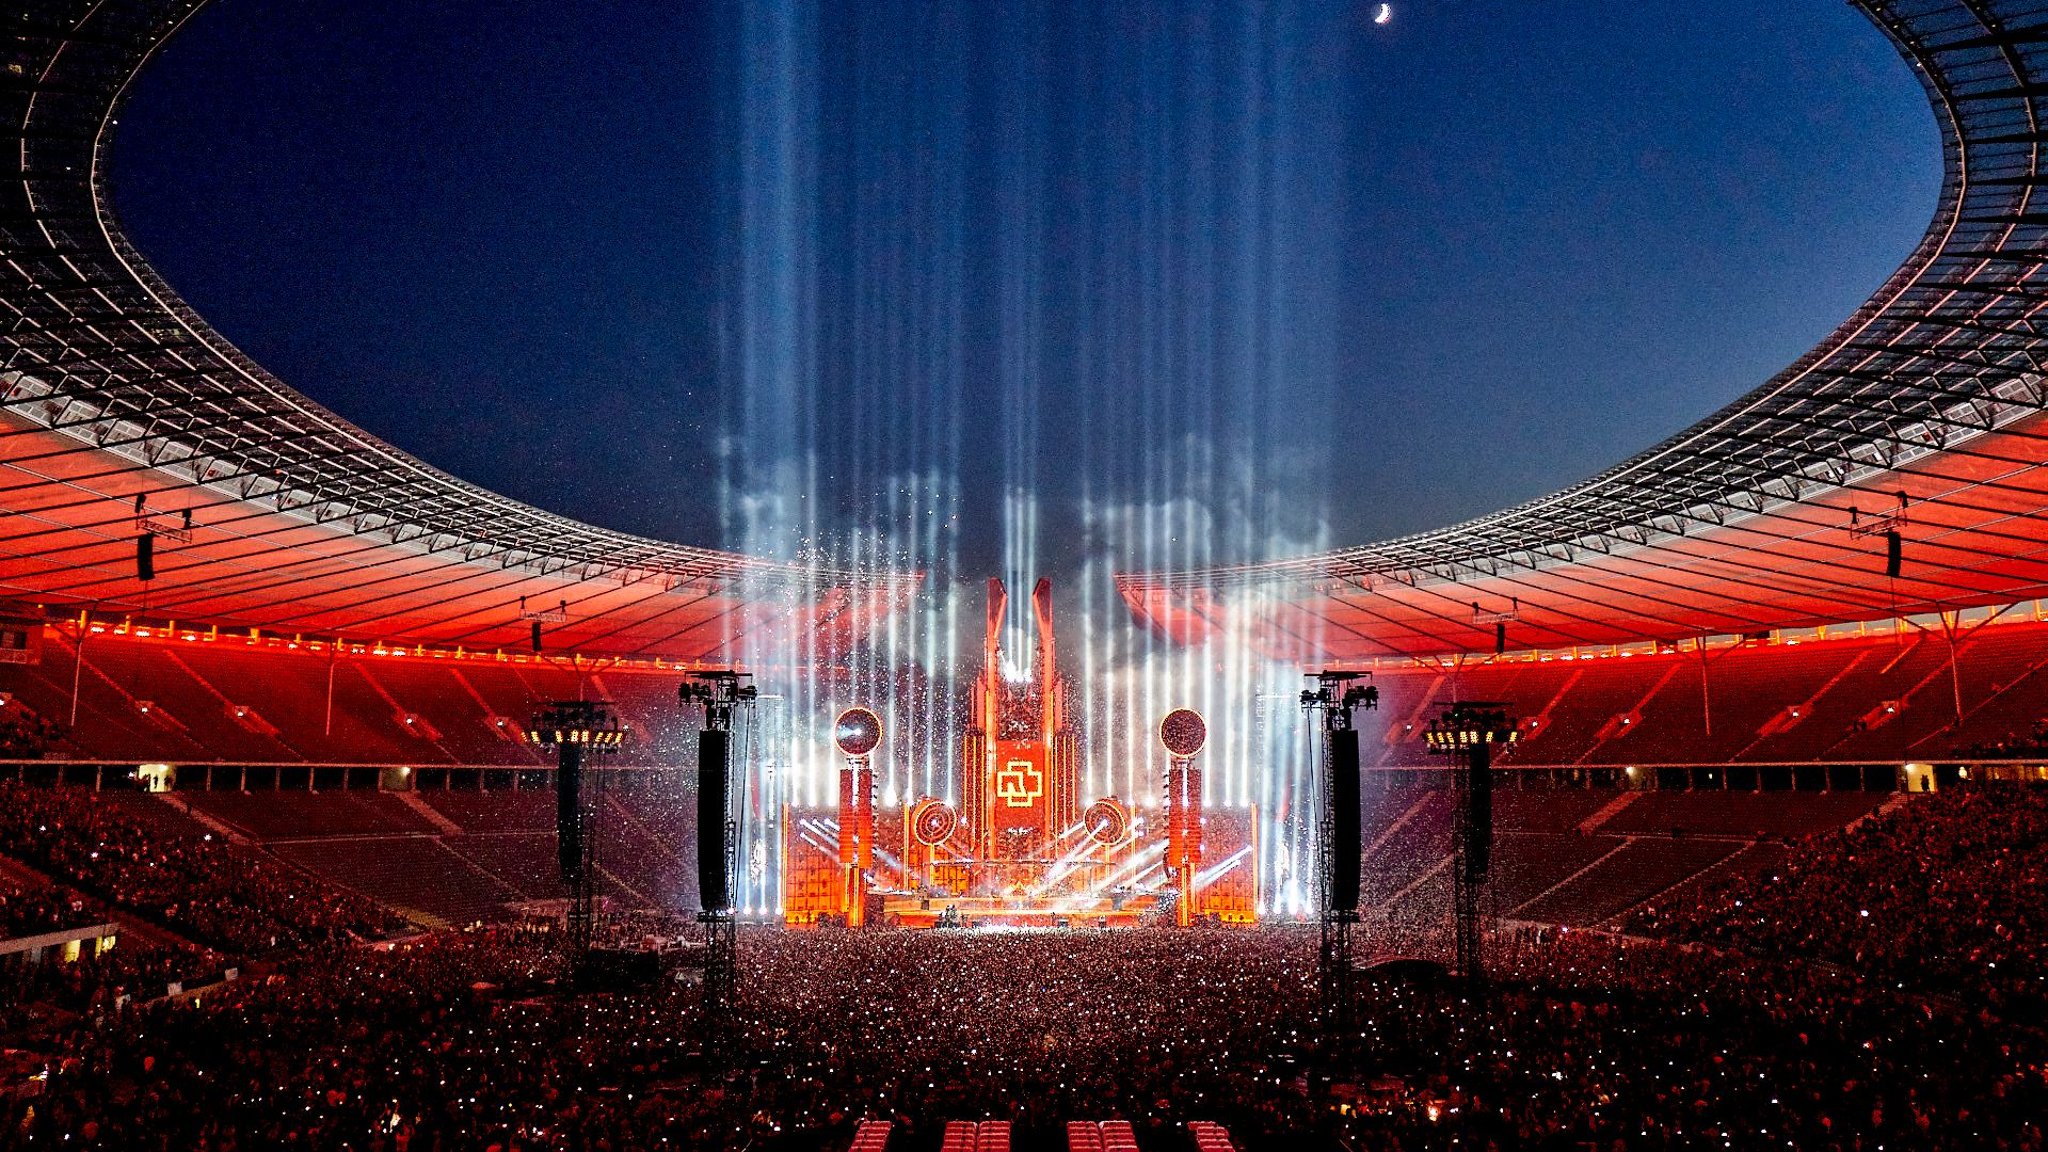 rammstein stadium tour 2023 berlin